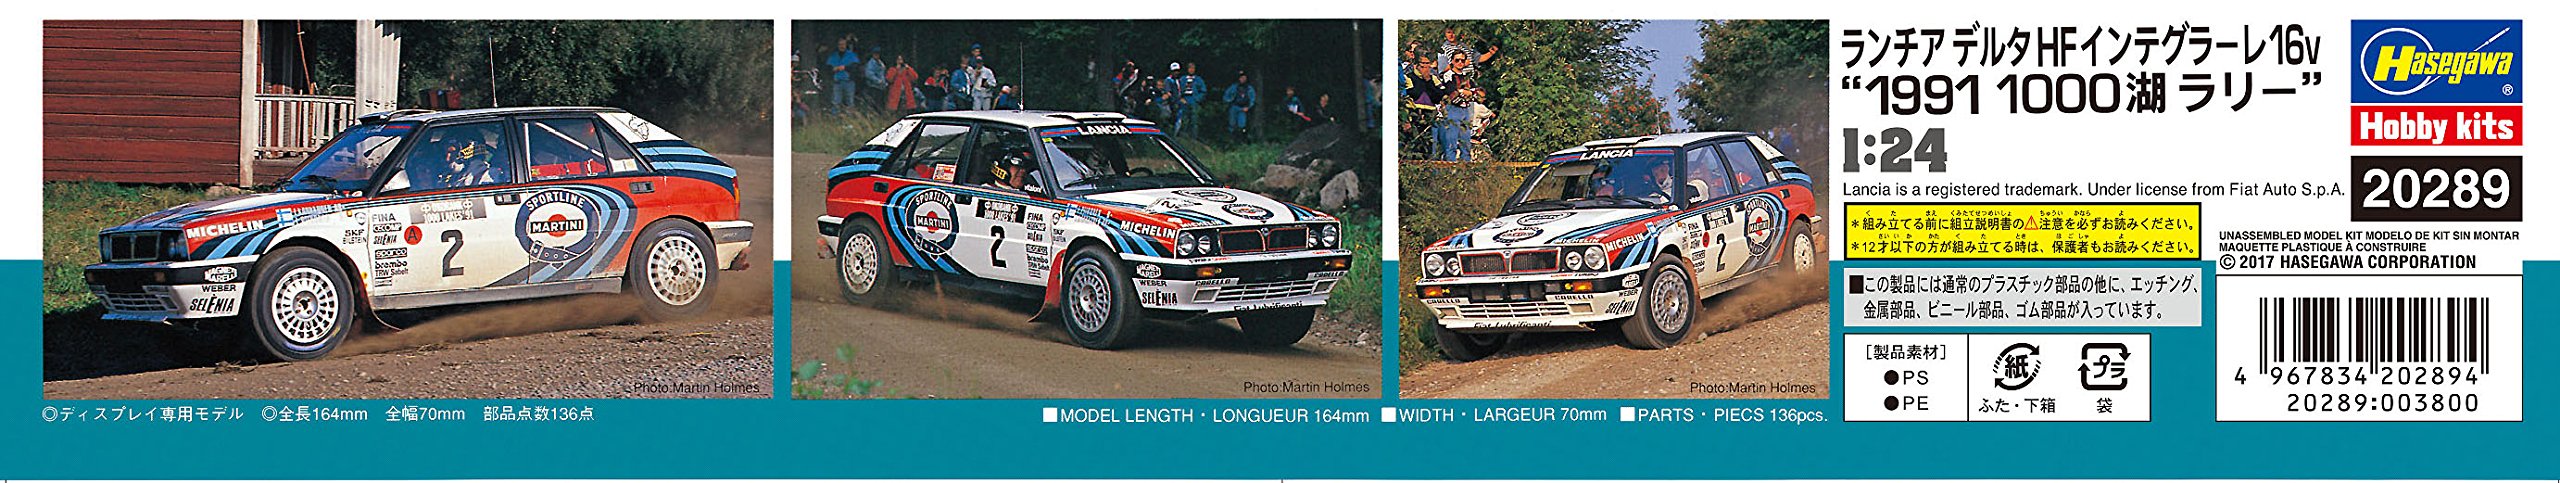 HASEGAWA 20289 Lancia Delta Hf Integrale 16V 1991 1000 Lakes Rally Bausatz im Maßstab 1:24